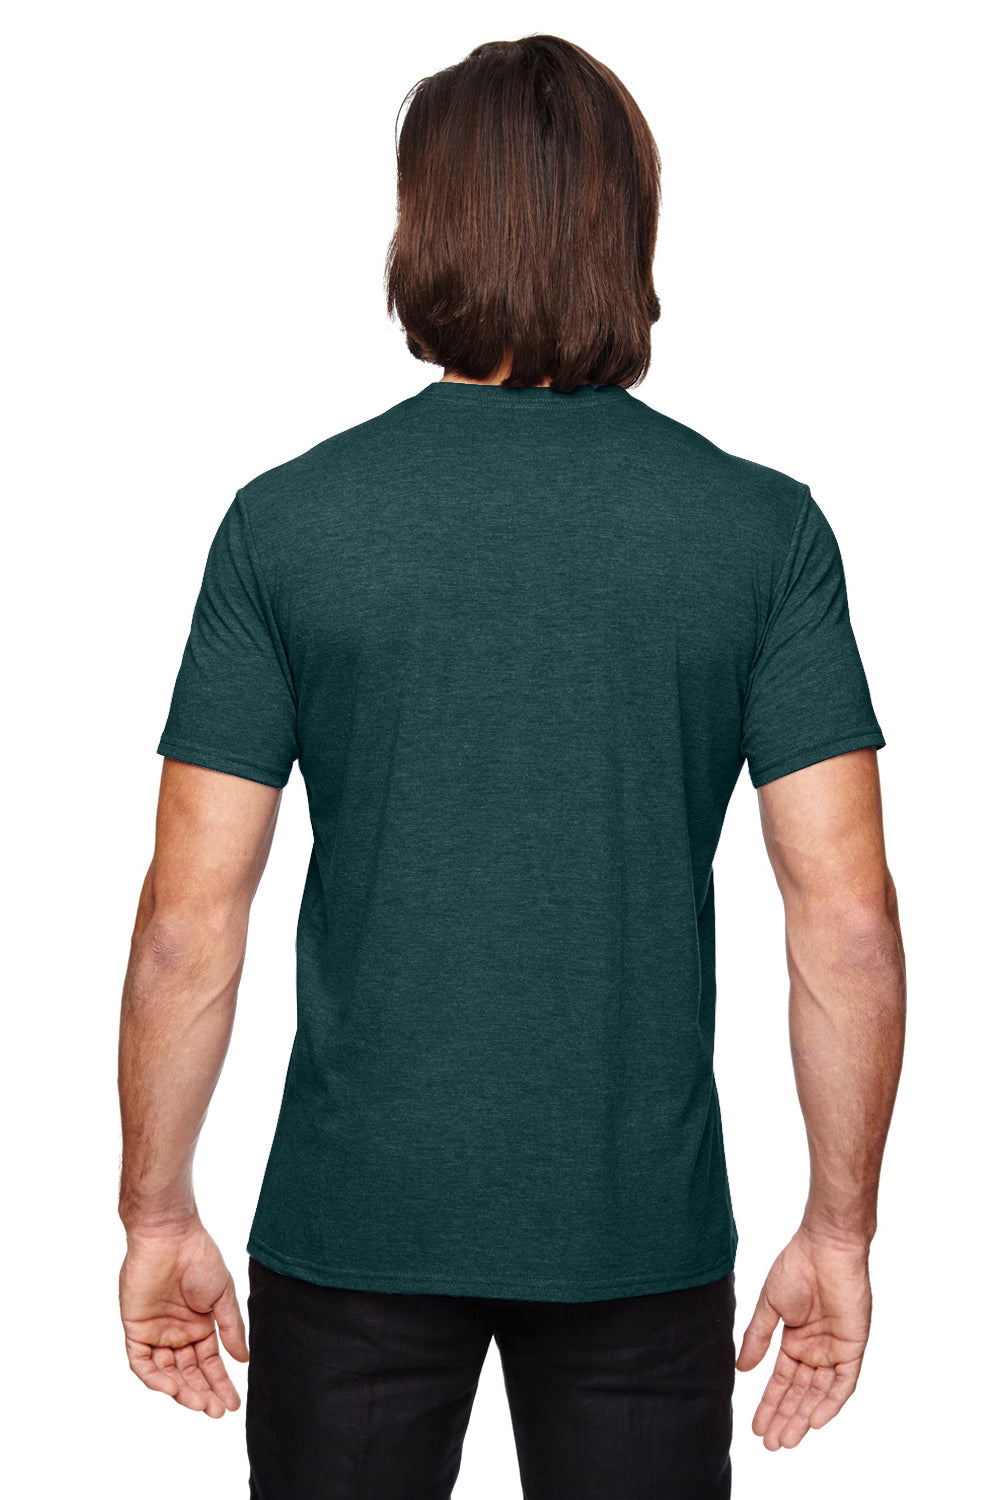 Anvil 6750 Mens Short Sleeve Crewneck T-Shirt Heather Dark Green Back